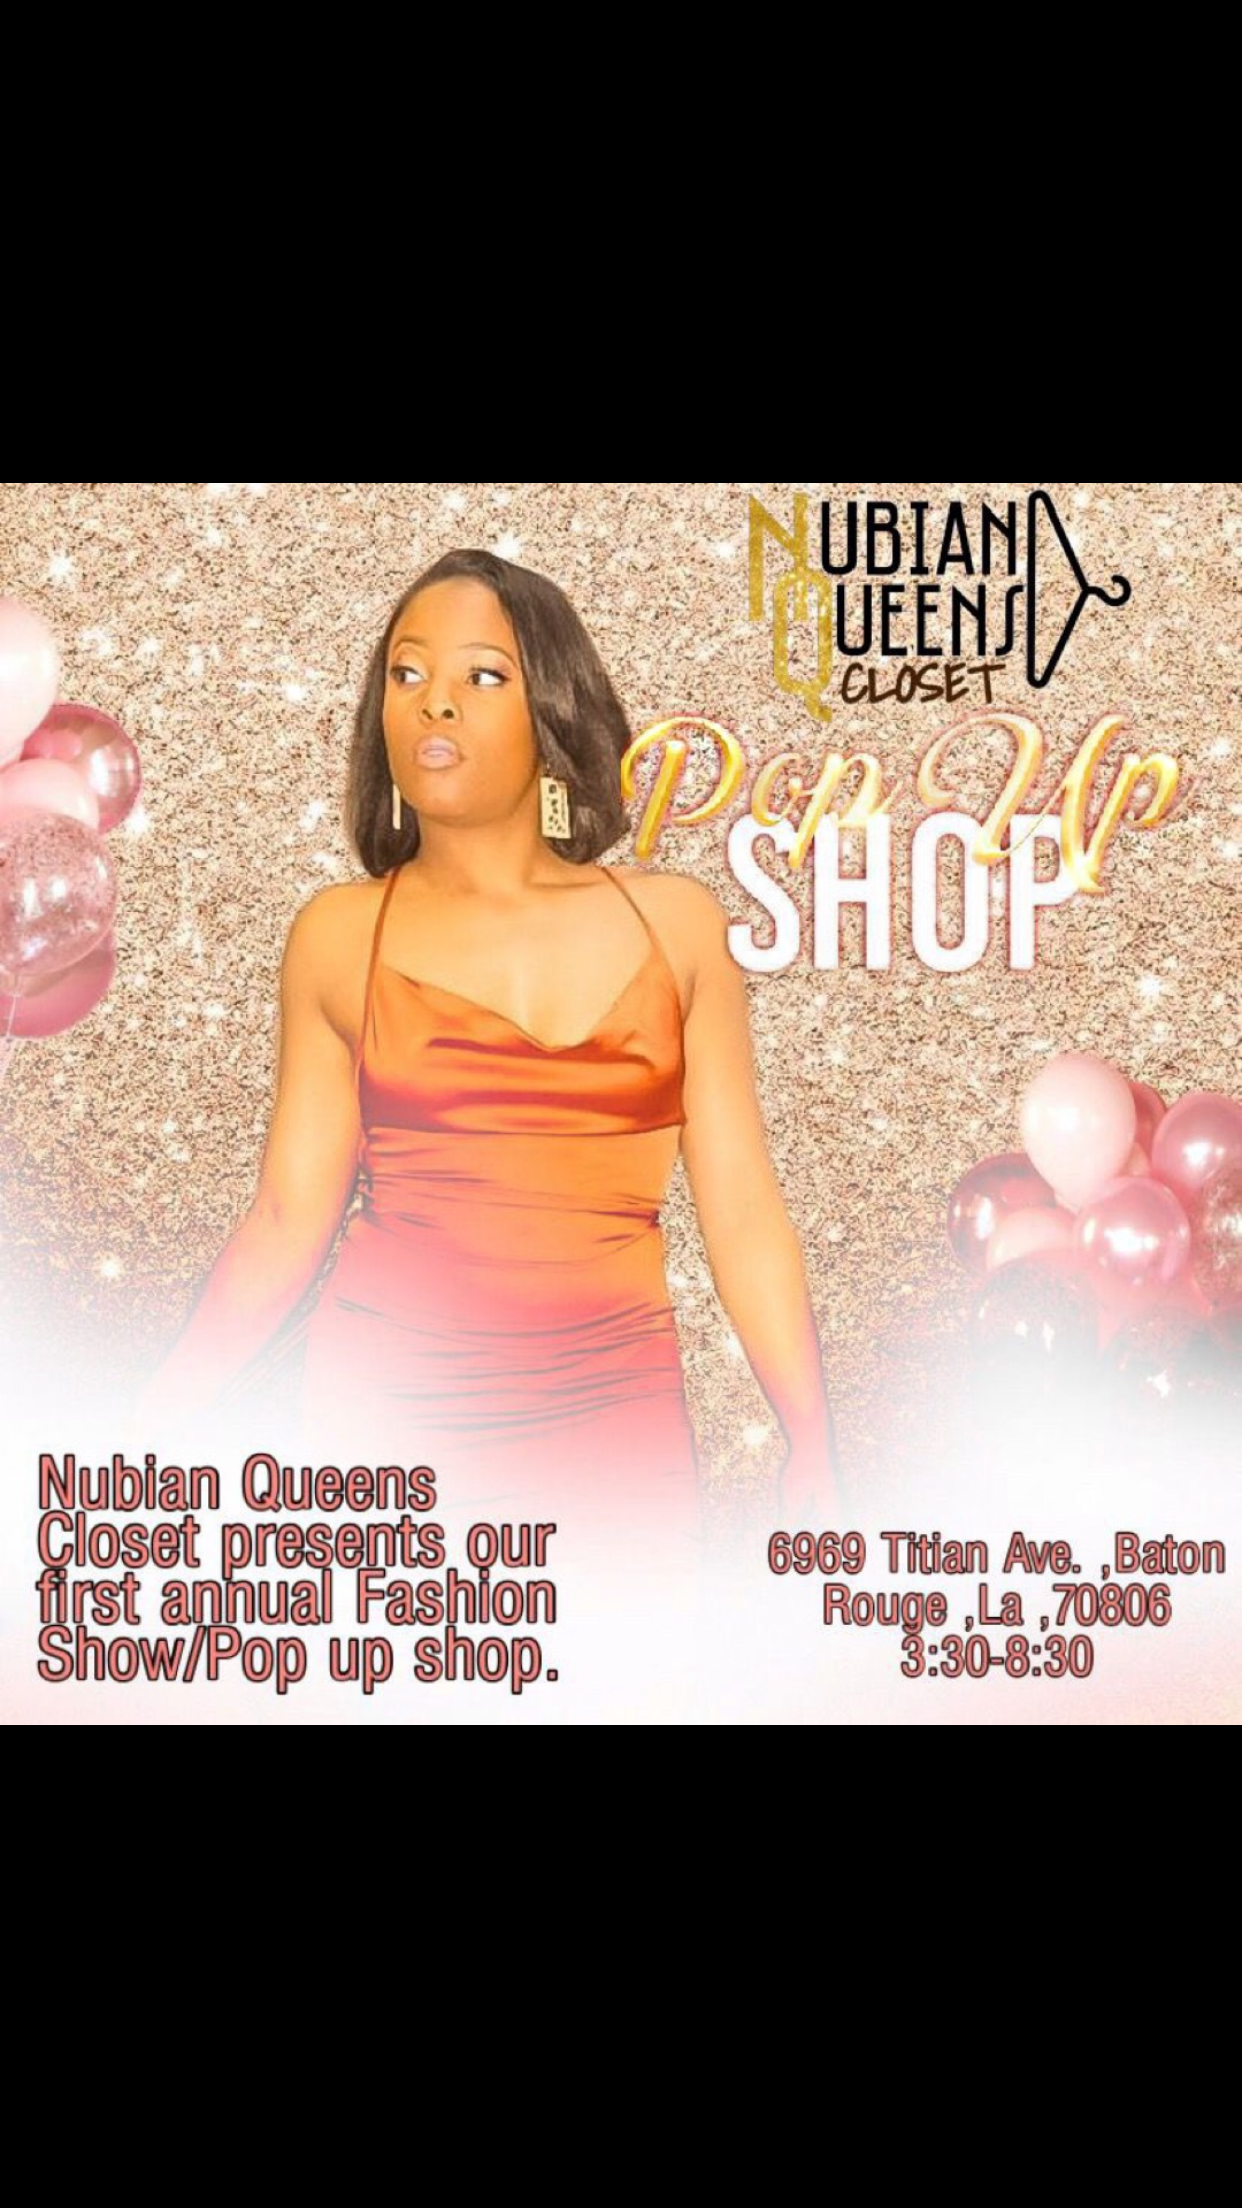 Nubian Queens Closet First Annual Fashion Show/Pop Up Shop